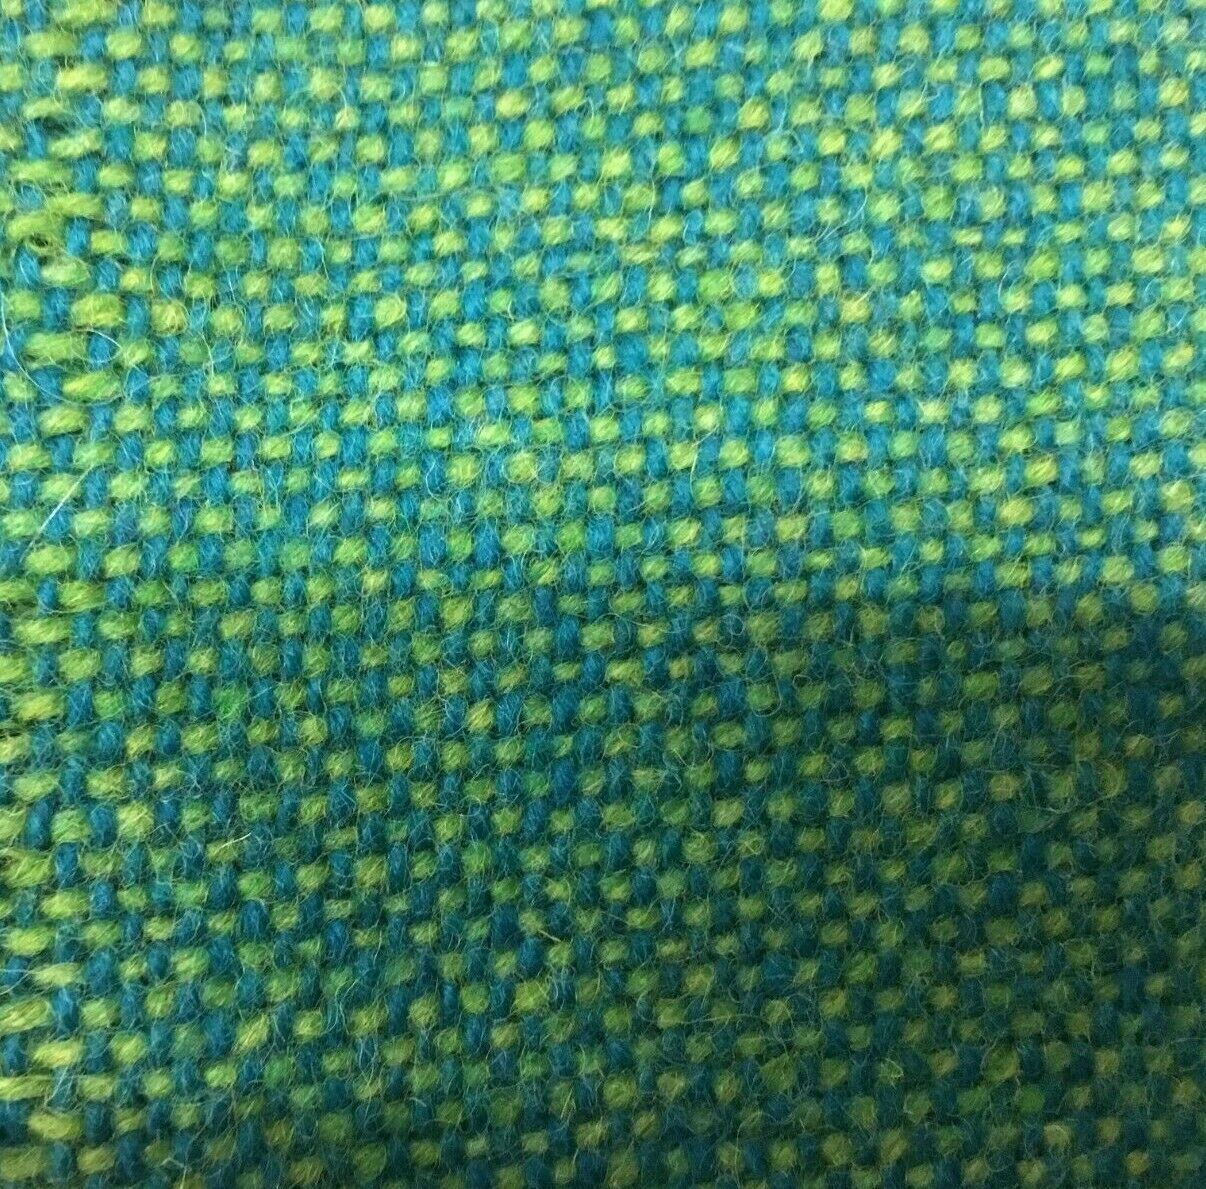 Designtex Tweed Bright Blue/Green Woven Wool Upholstery Fabric 2.75 ...